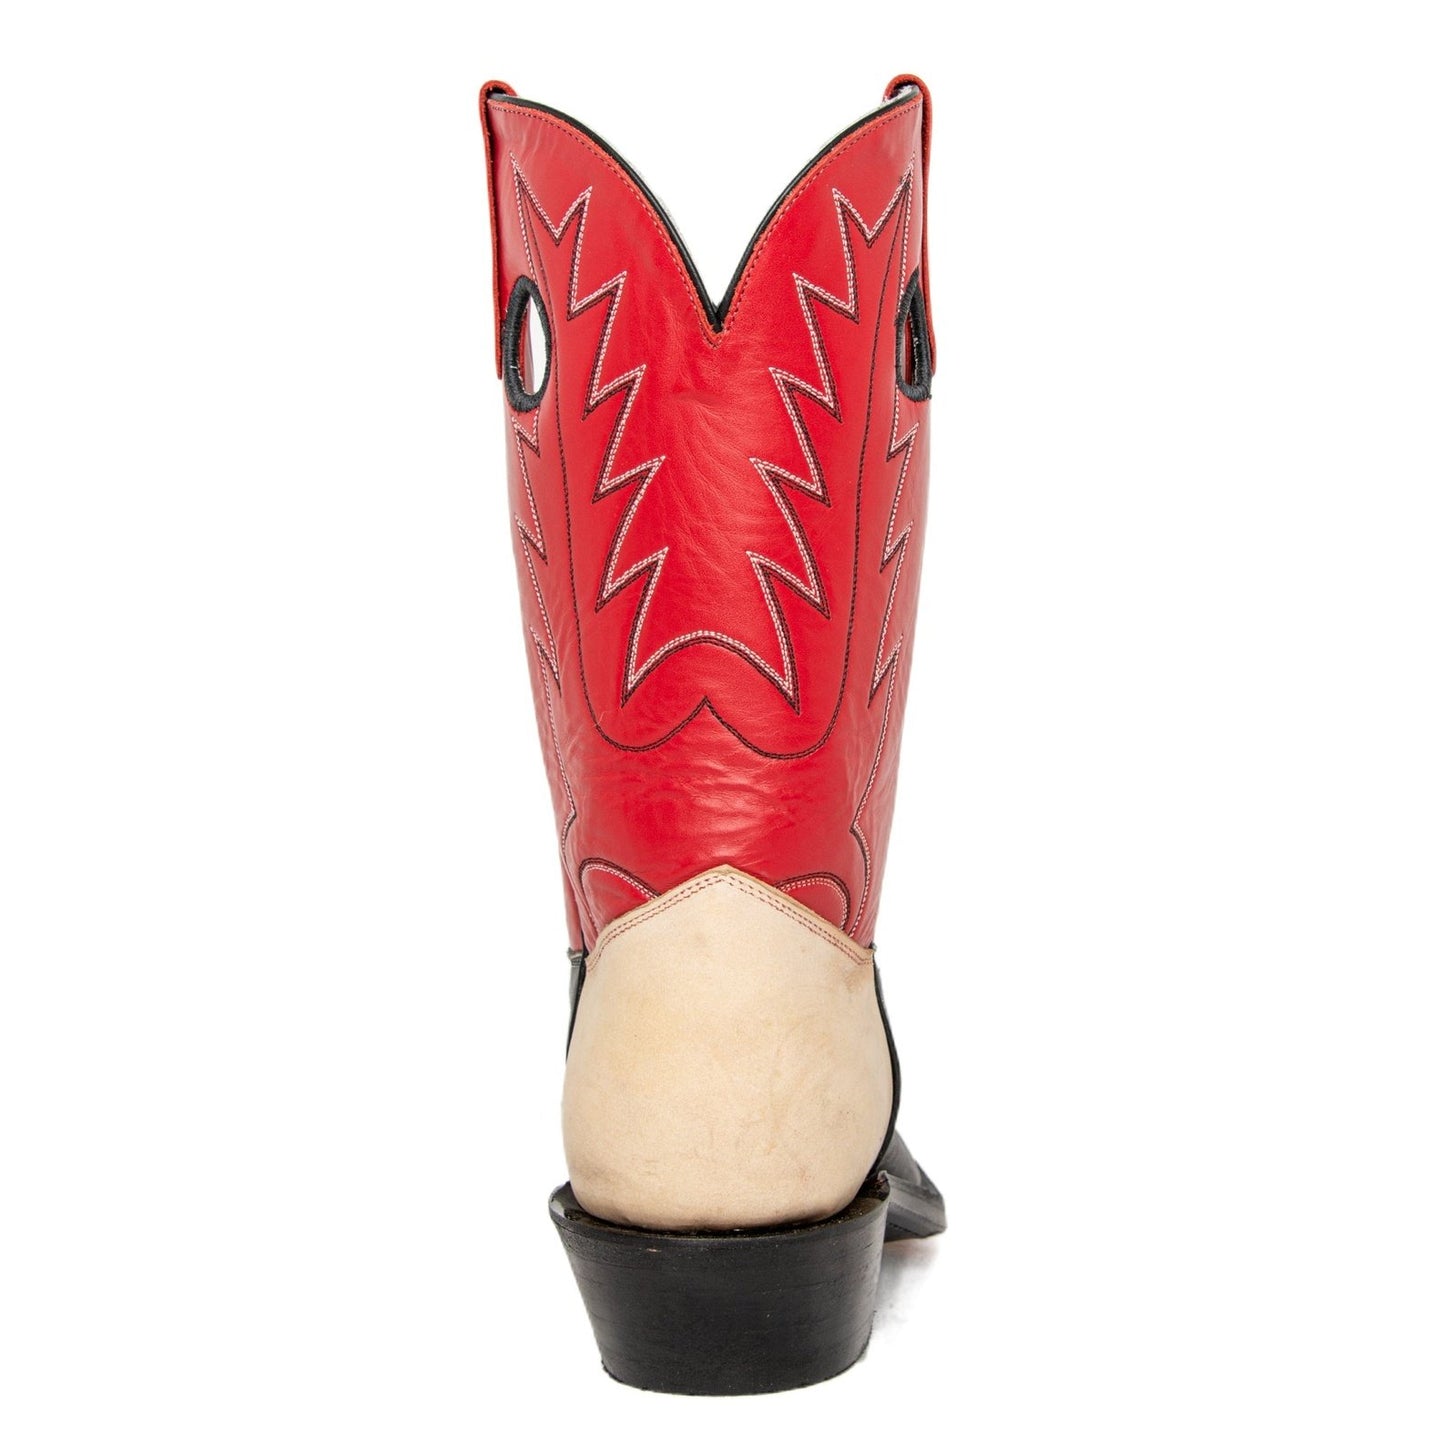 Olathe Men's Cowboy Boots 11" Rough Stock Riding Heel Black/Red 6763